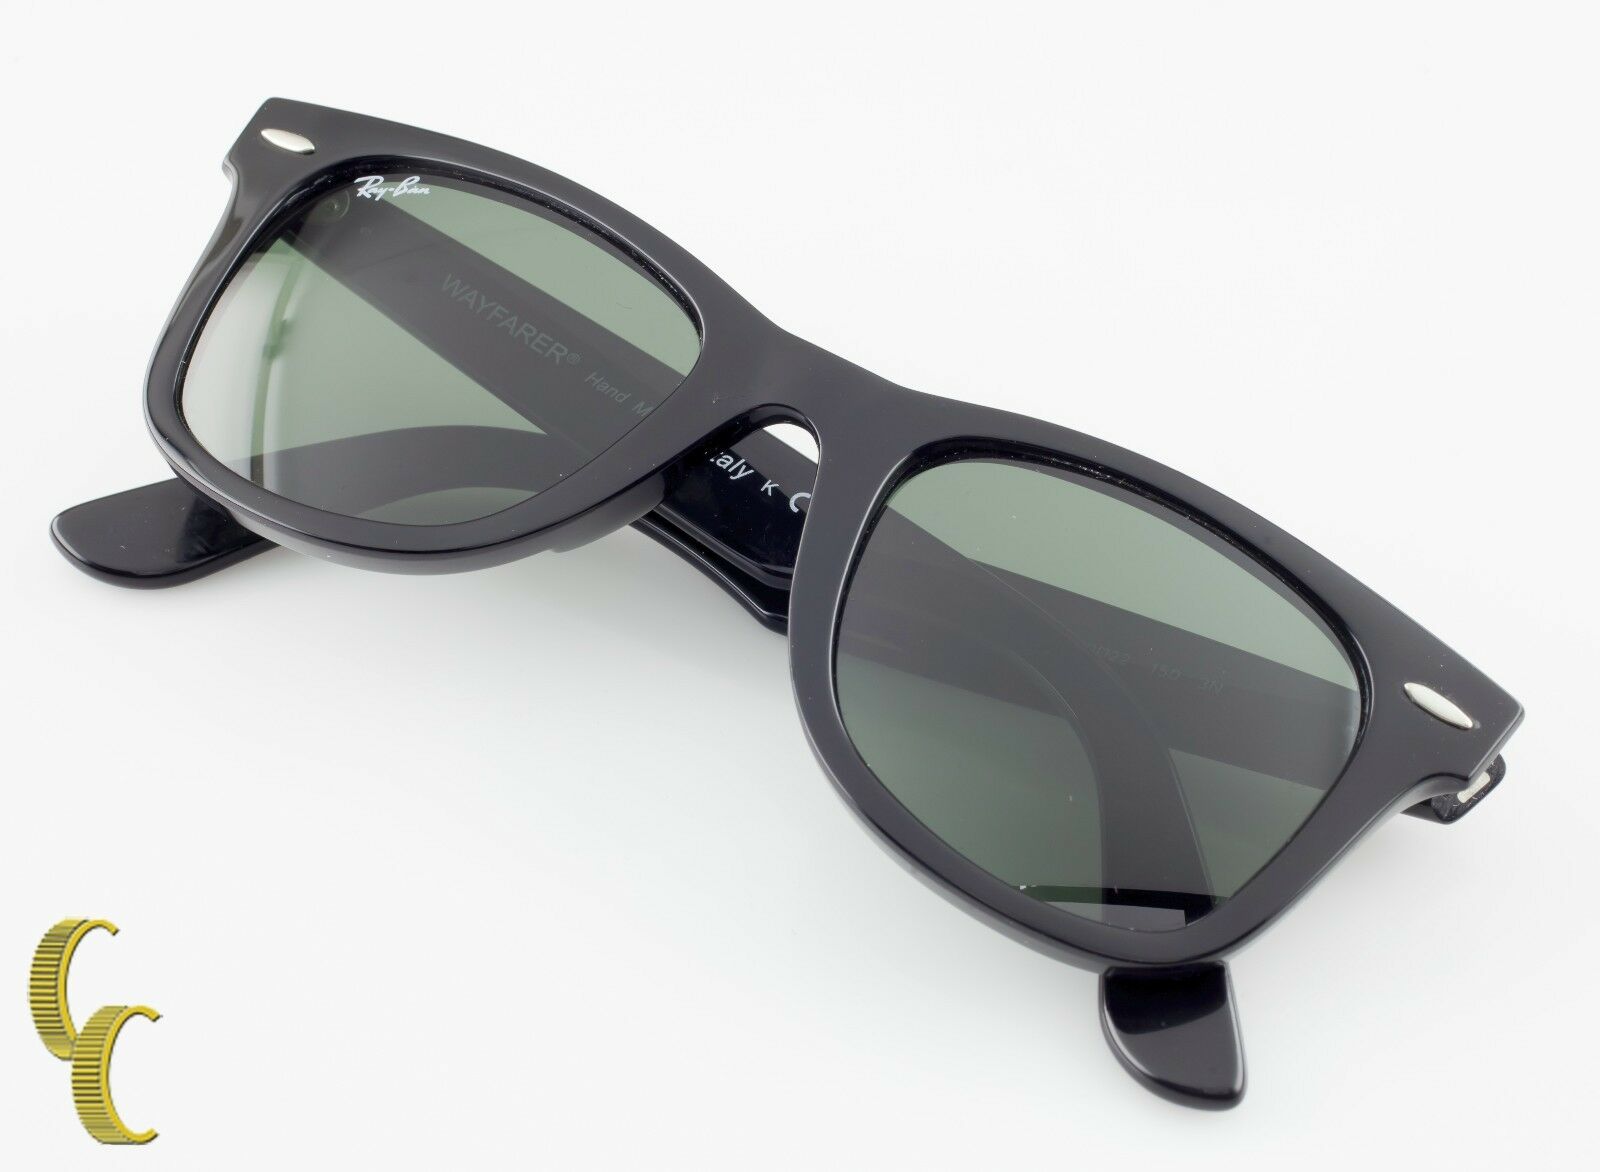 ORIGINAL WAYFARER CLASSIC Sunglasses in Black and Green - RB2140F | Ray-Ban®  US